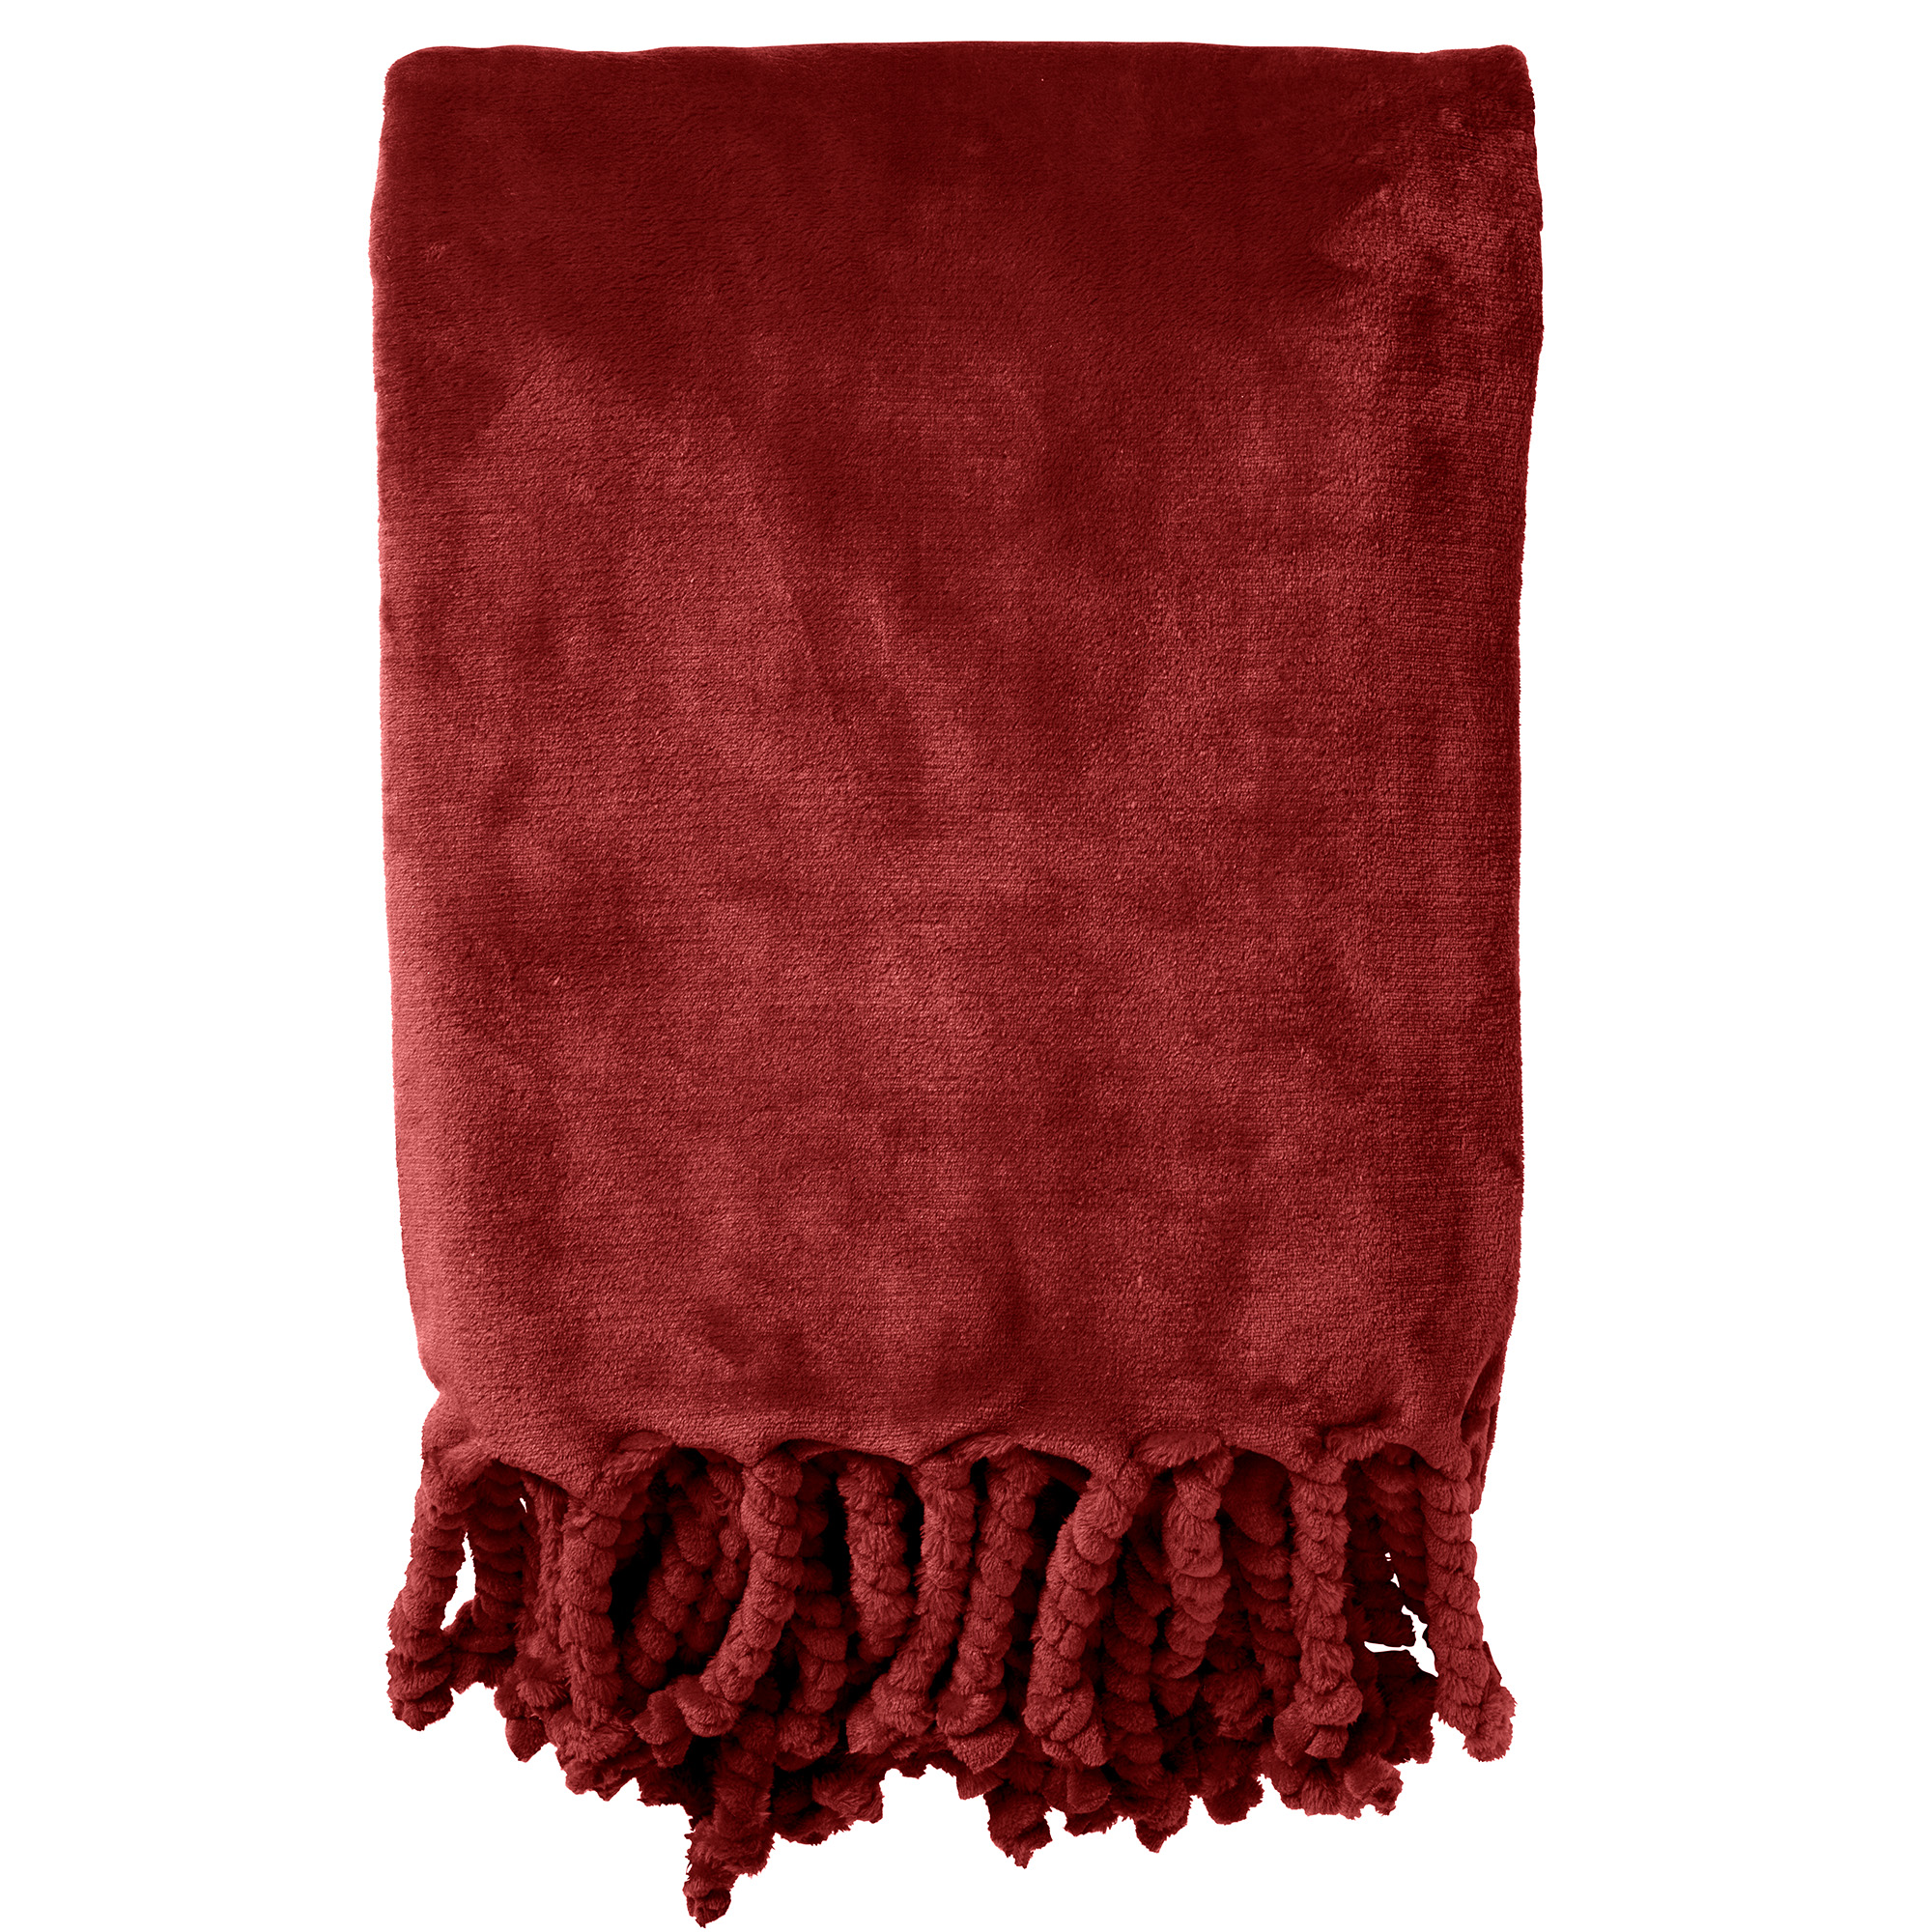 FLORIJN - Plaid 150x200 cm - grote fleece plaid met flosjes - Merlot - bordeaux rood